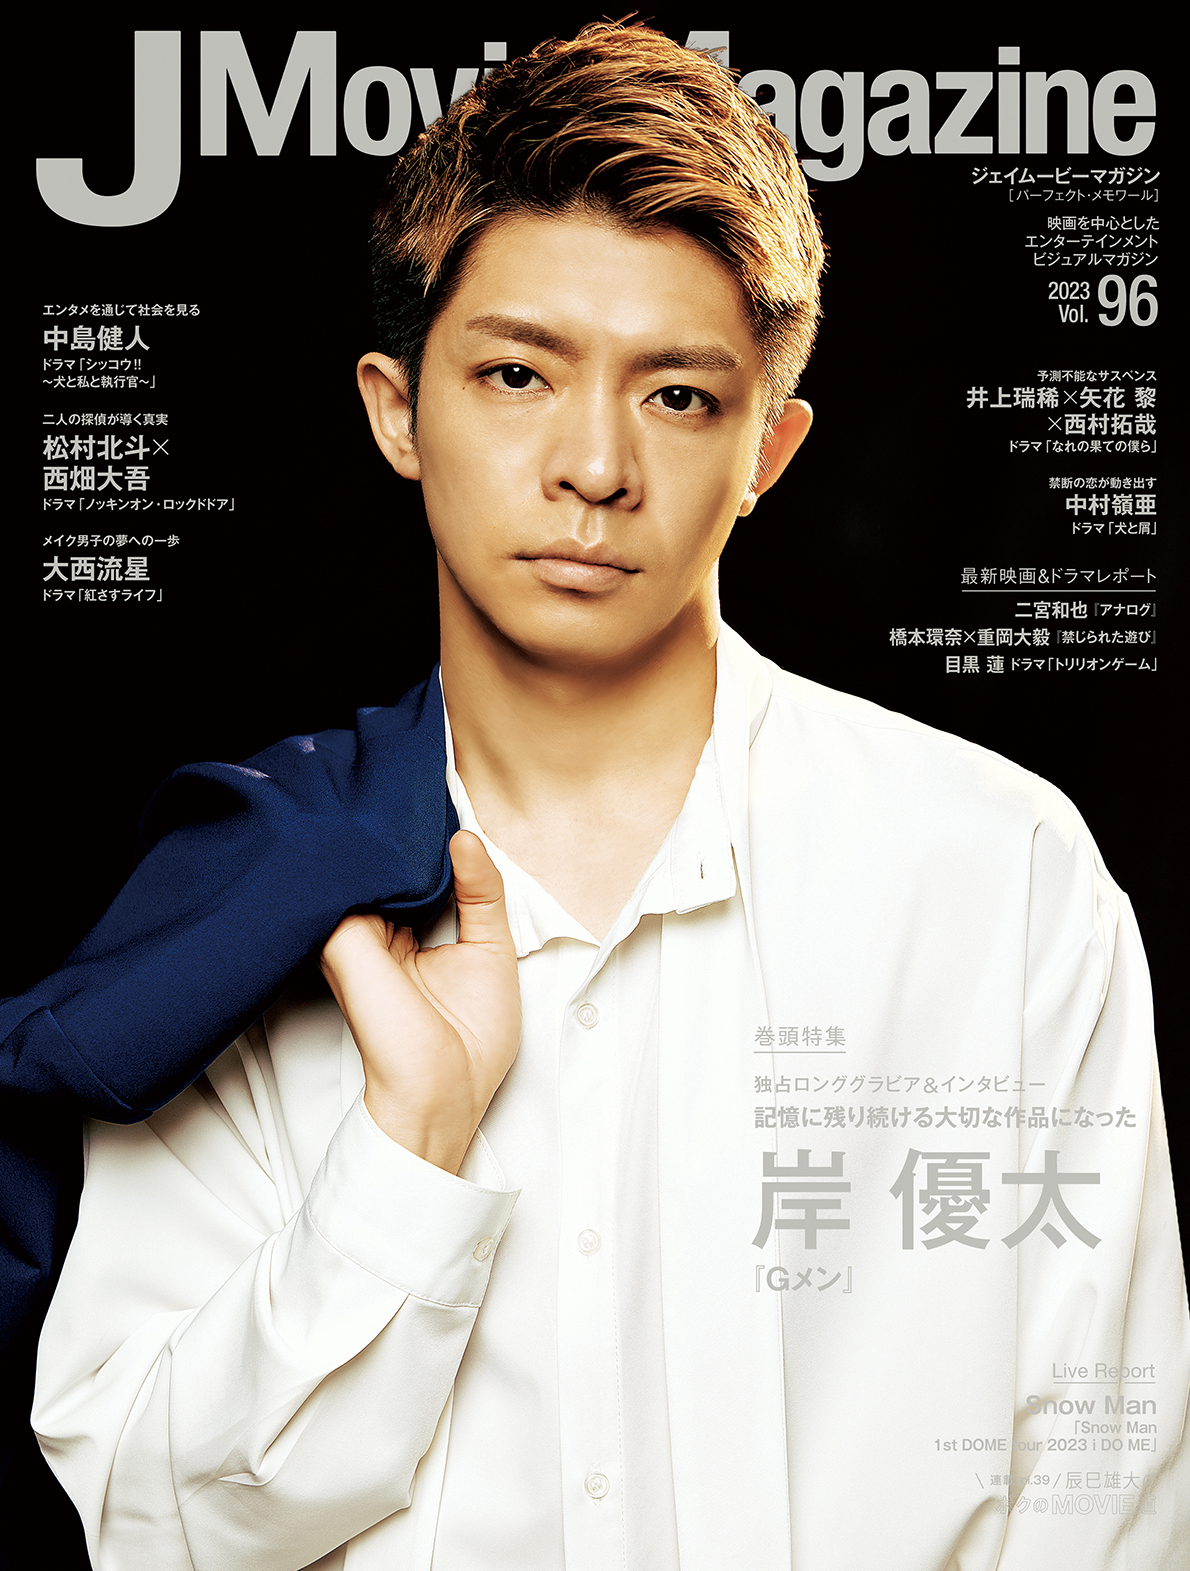 J Movie Magazine Vol.96【表紙:岸 優太『G メン』】 7月3日発売